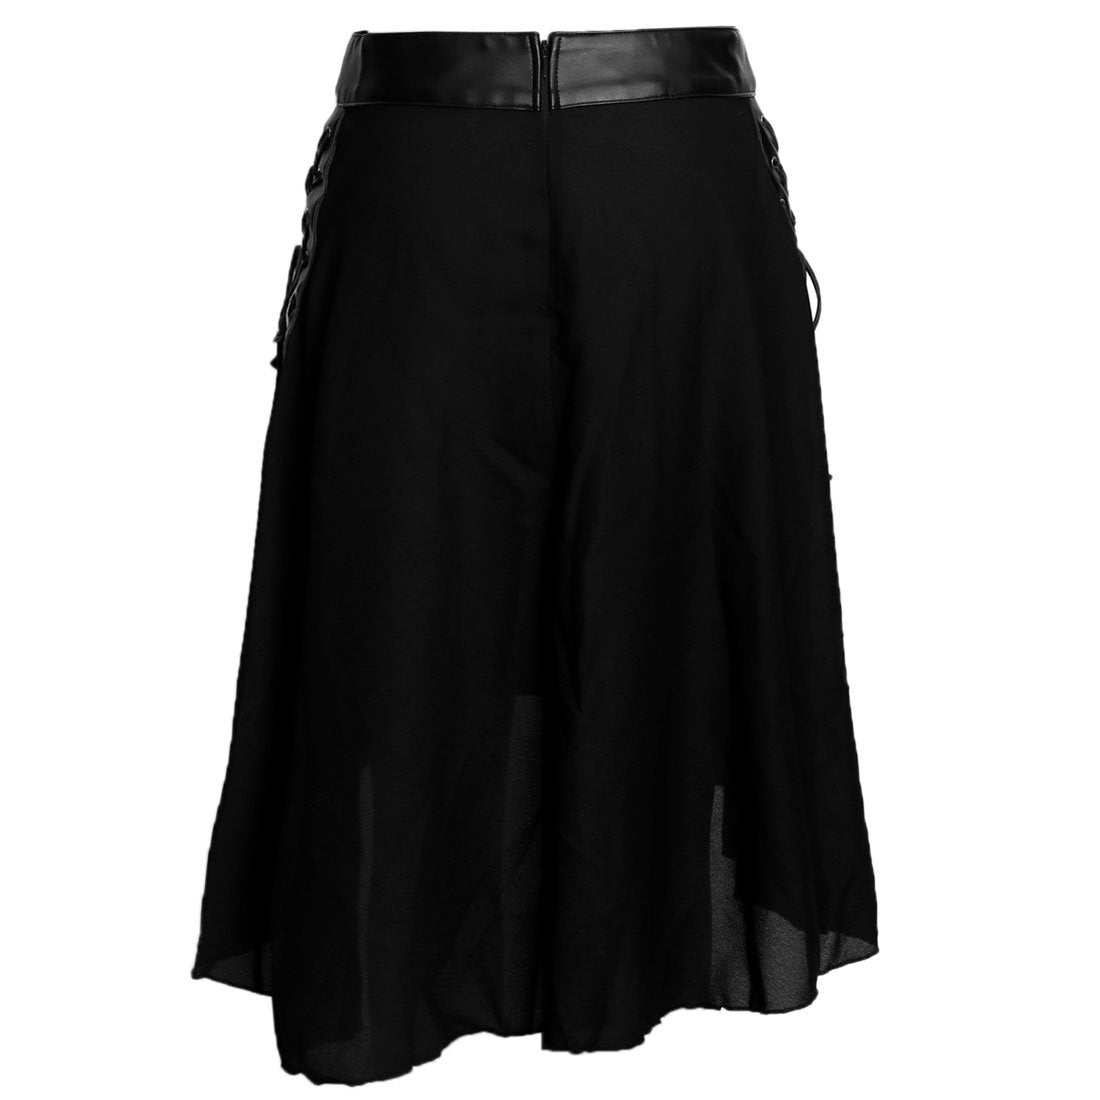 Viridis Skirt - Corset Revolution